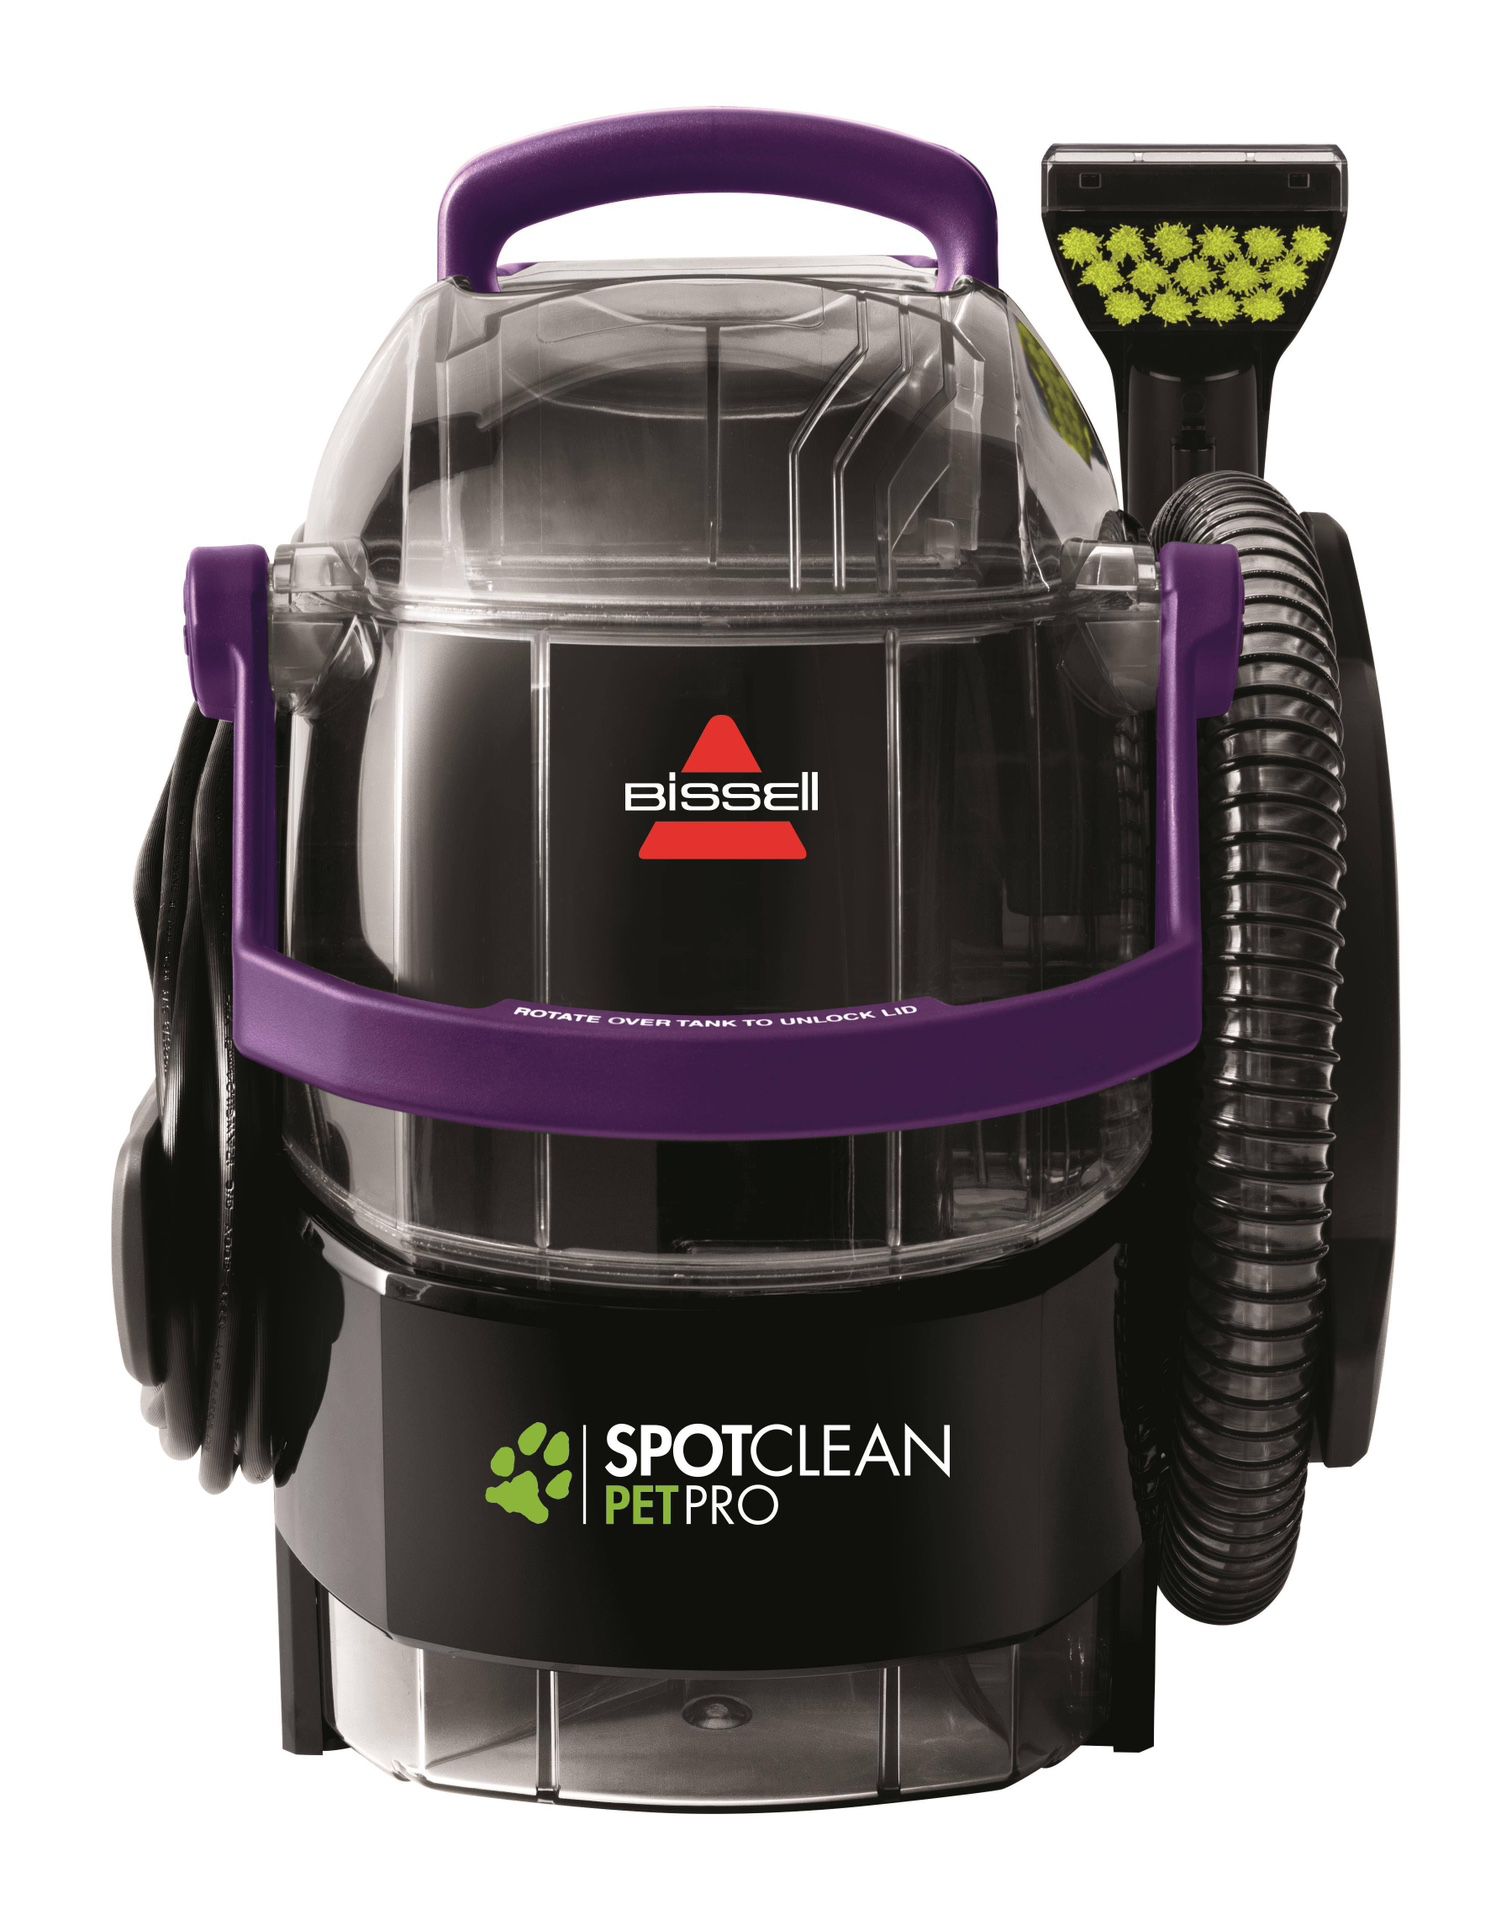 BISSELL SpotClean Pet Pro Portable Carpet Cleaner, Grapevine Purple, Black